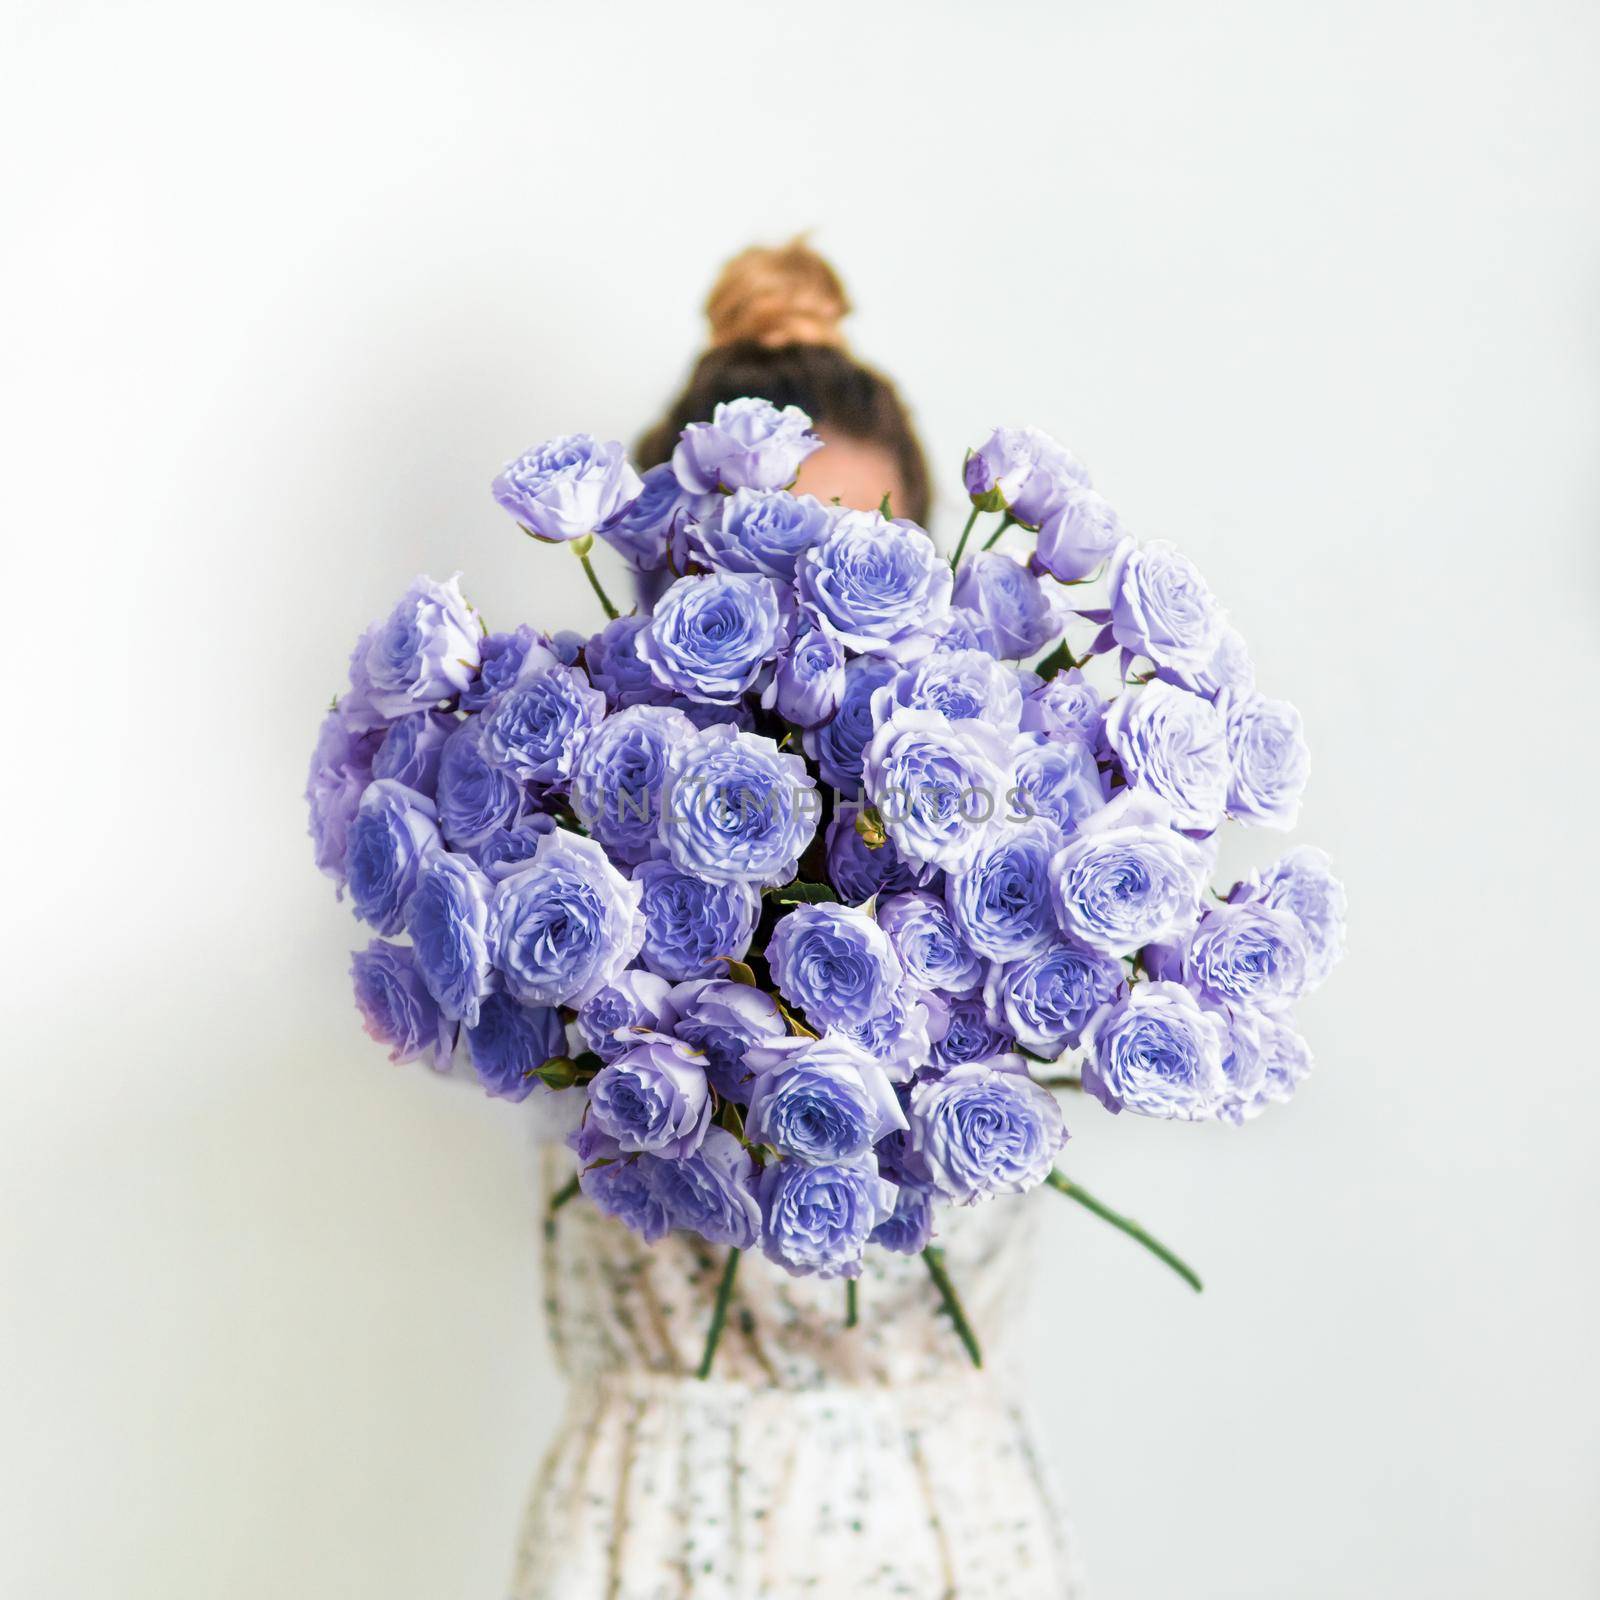 Live violet bouquet, very peri color 2022 by fascinadora